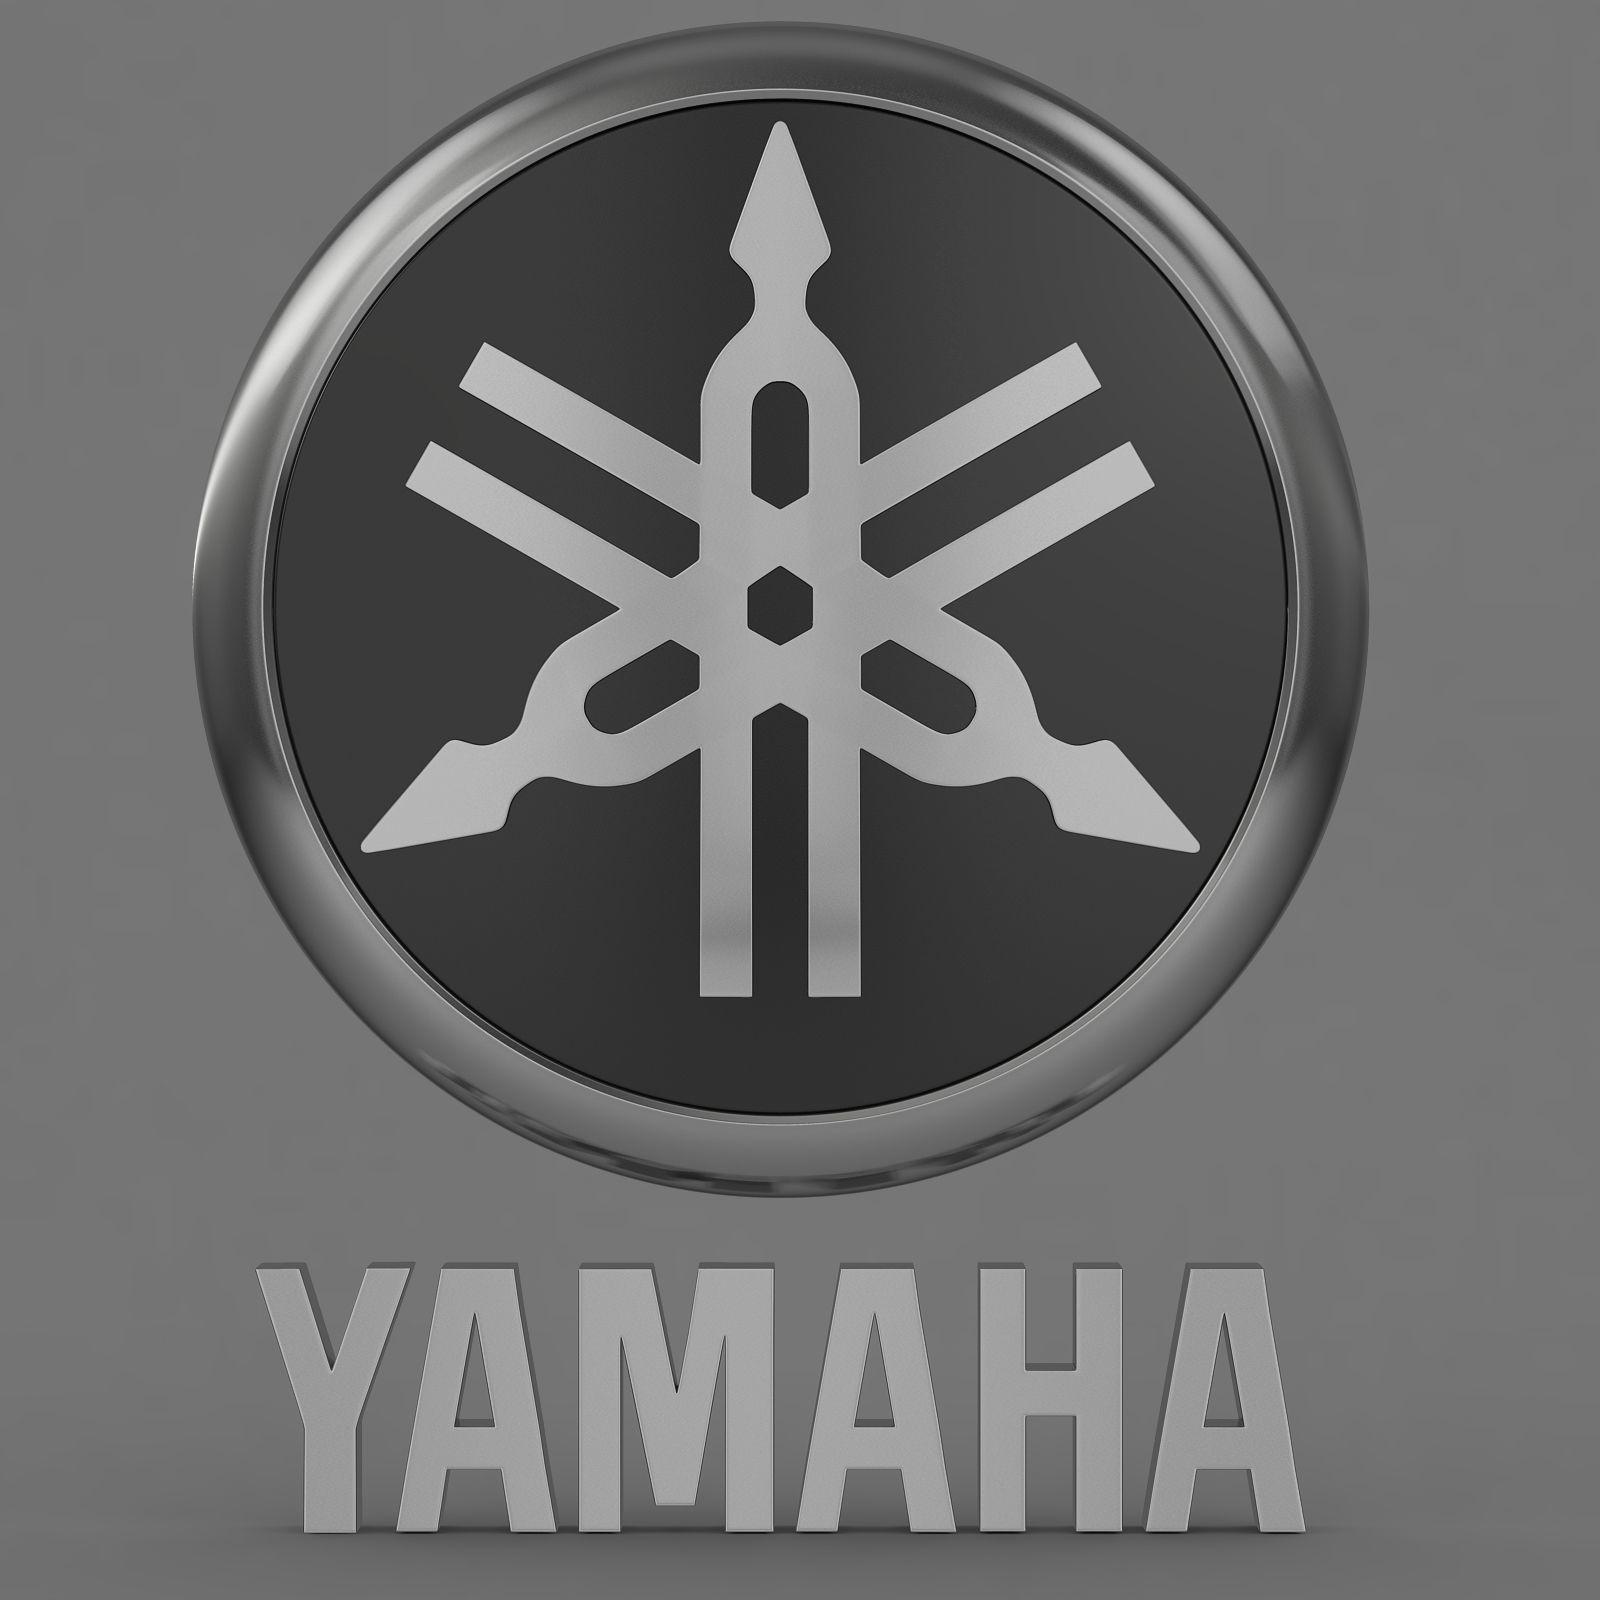 Cool Yamaha Logo - yamaha logo 2 3D logotype